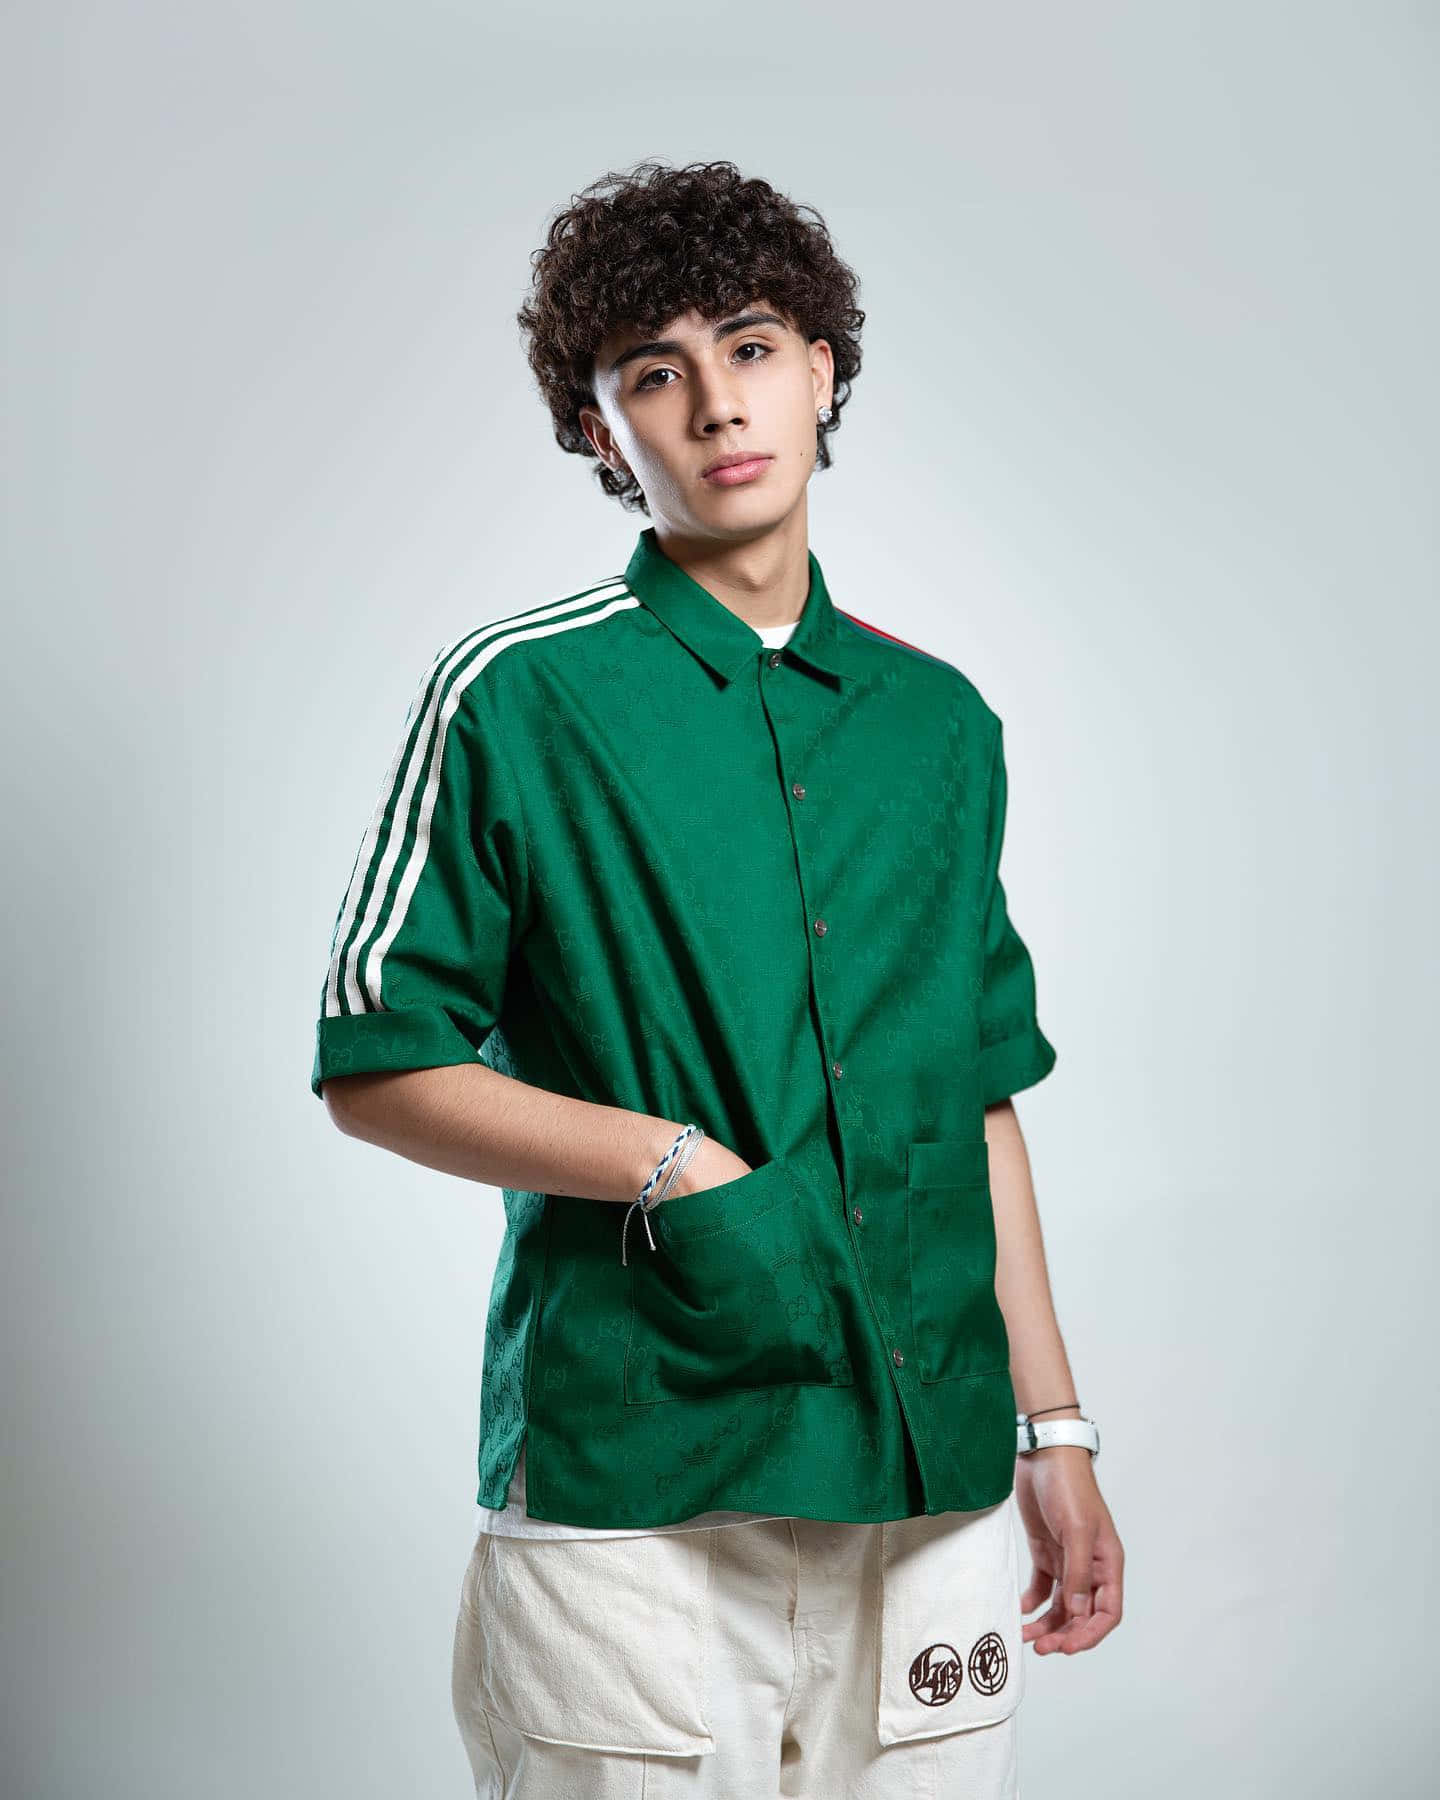 Stylish Young Manin Green Shirt Wallpaper